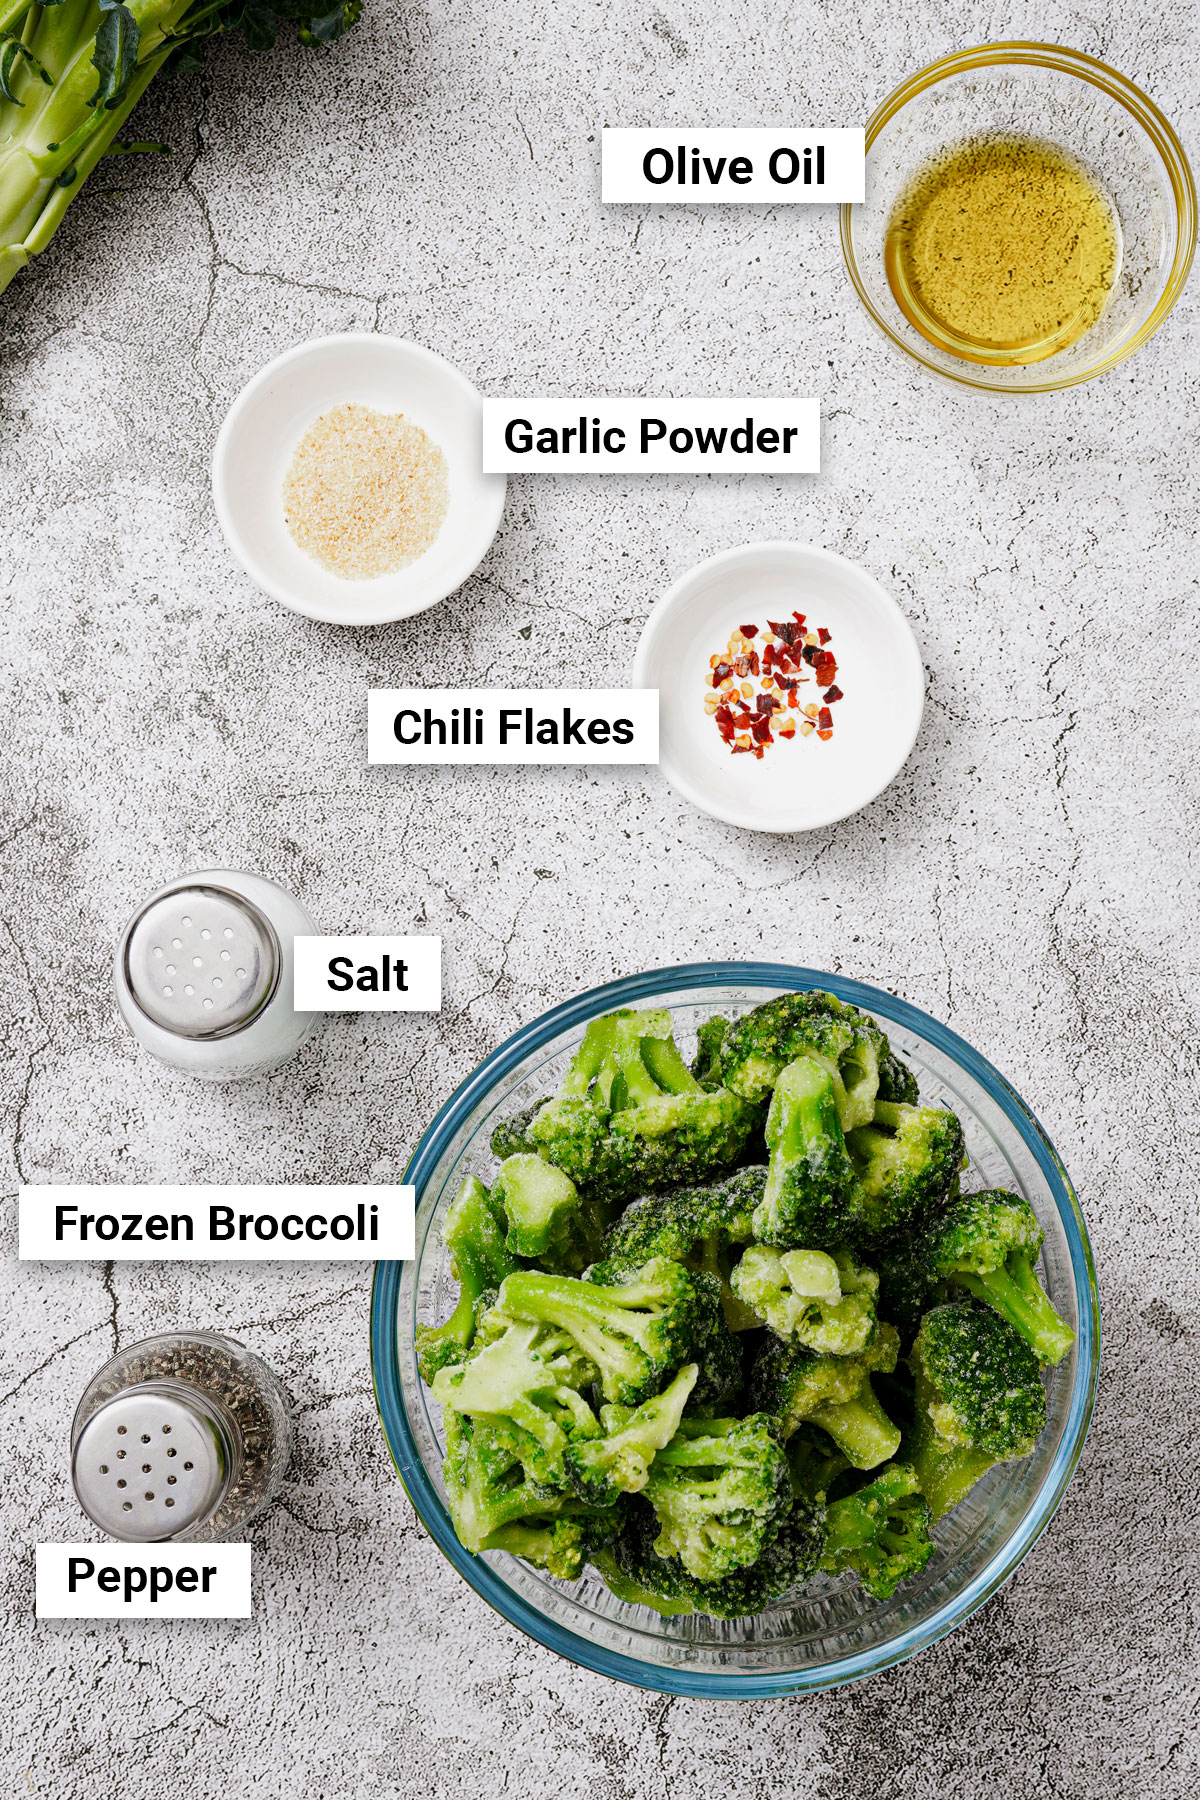 Ingredients for frozen broccoli air fryer recipe